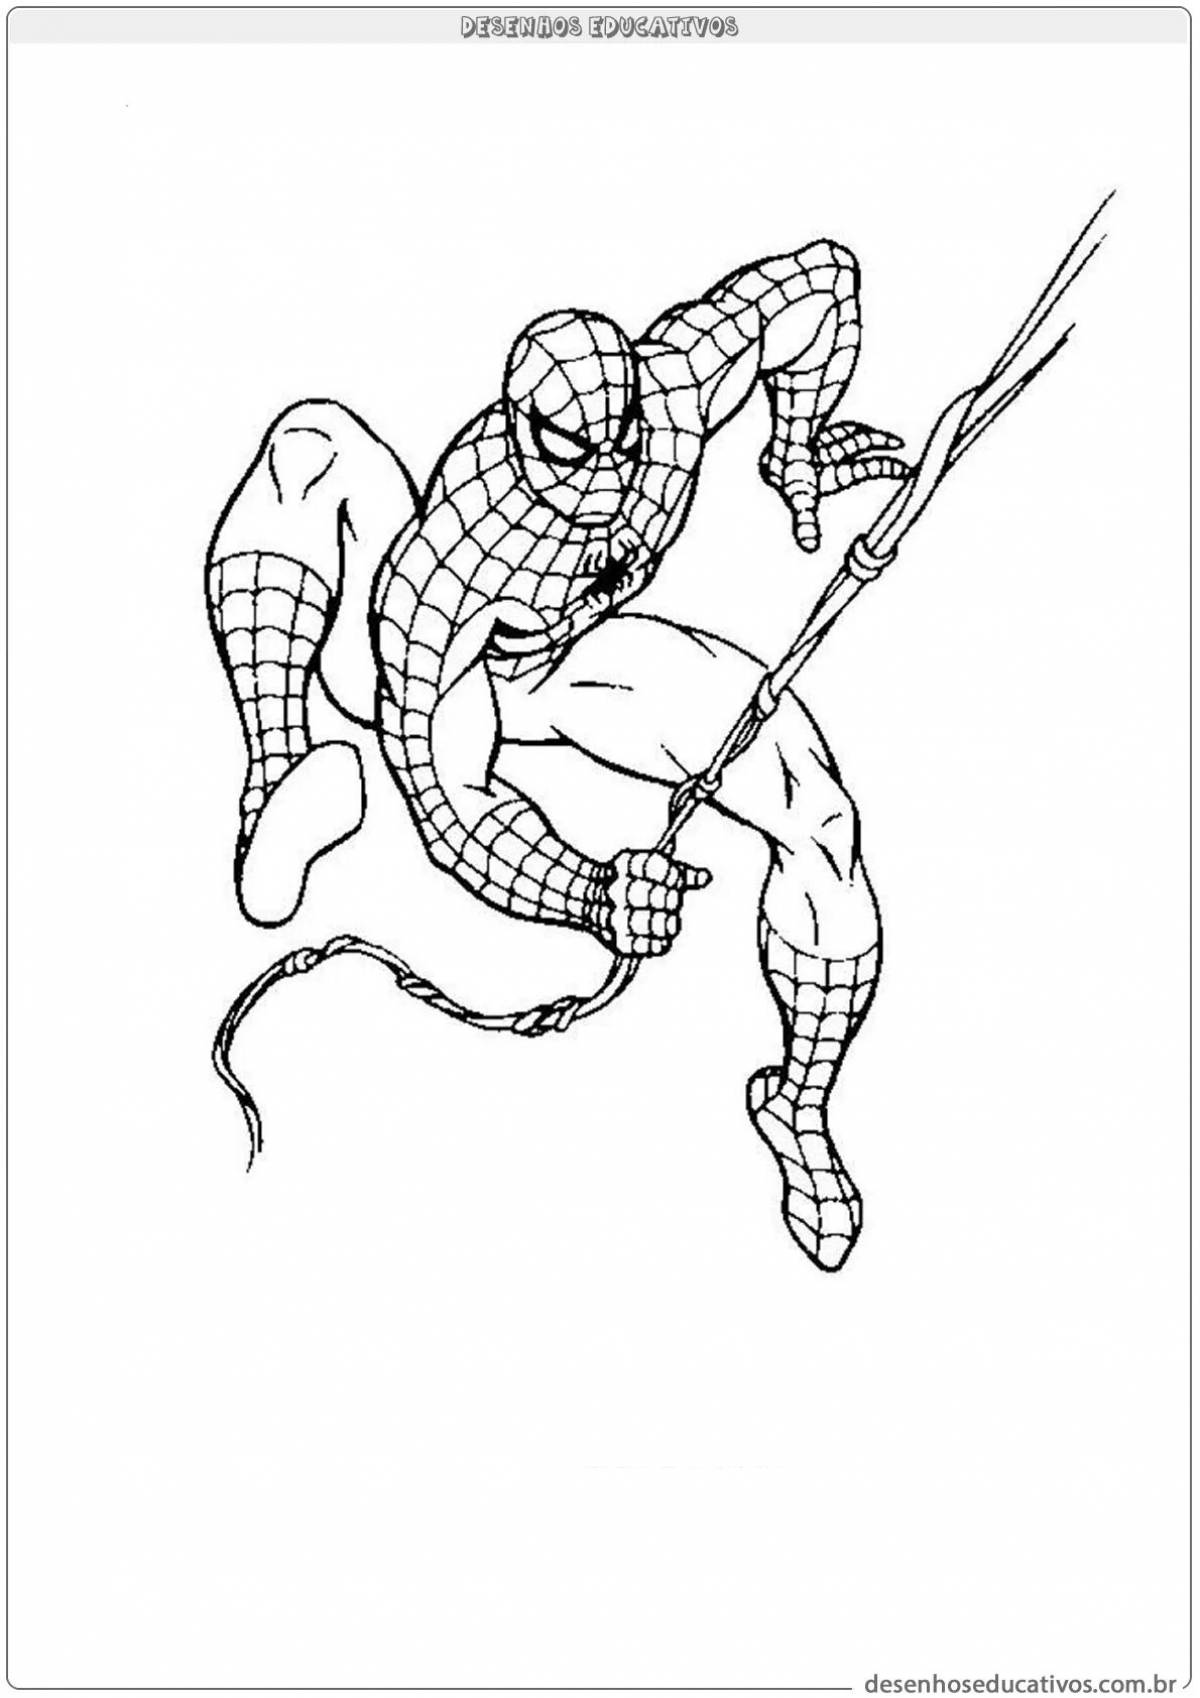 Bizarre Spiderman antistress coloring book